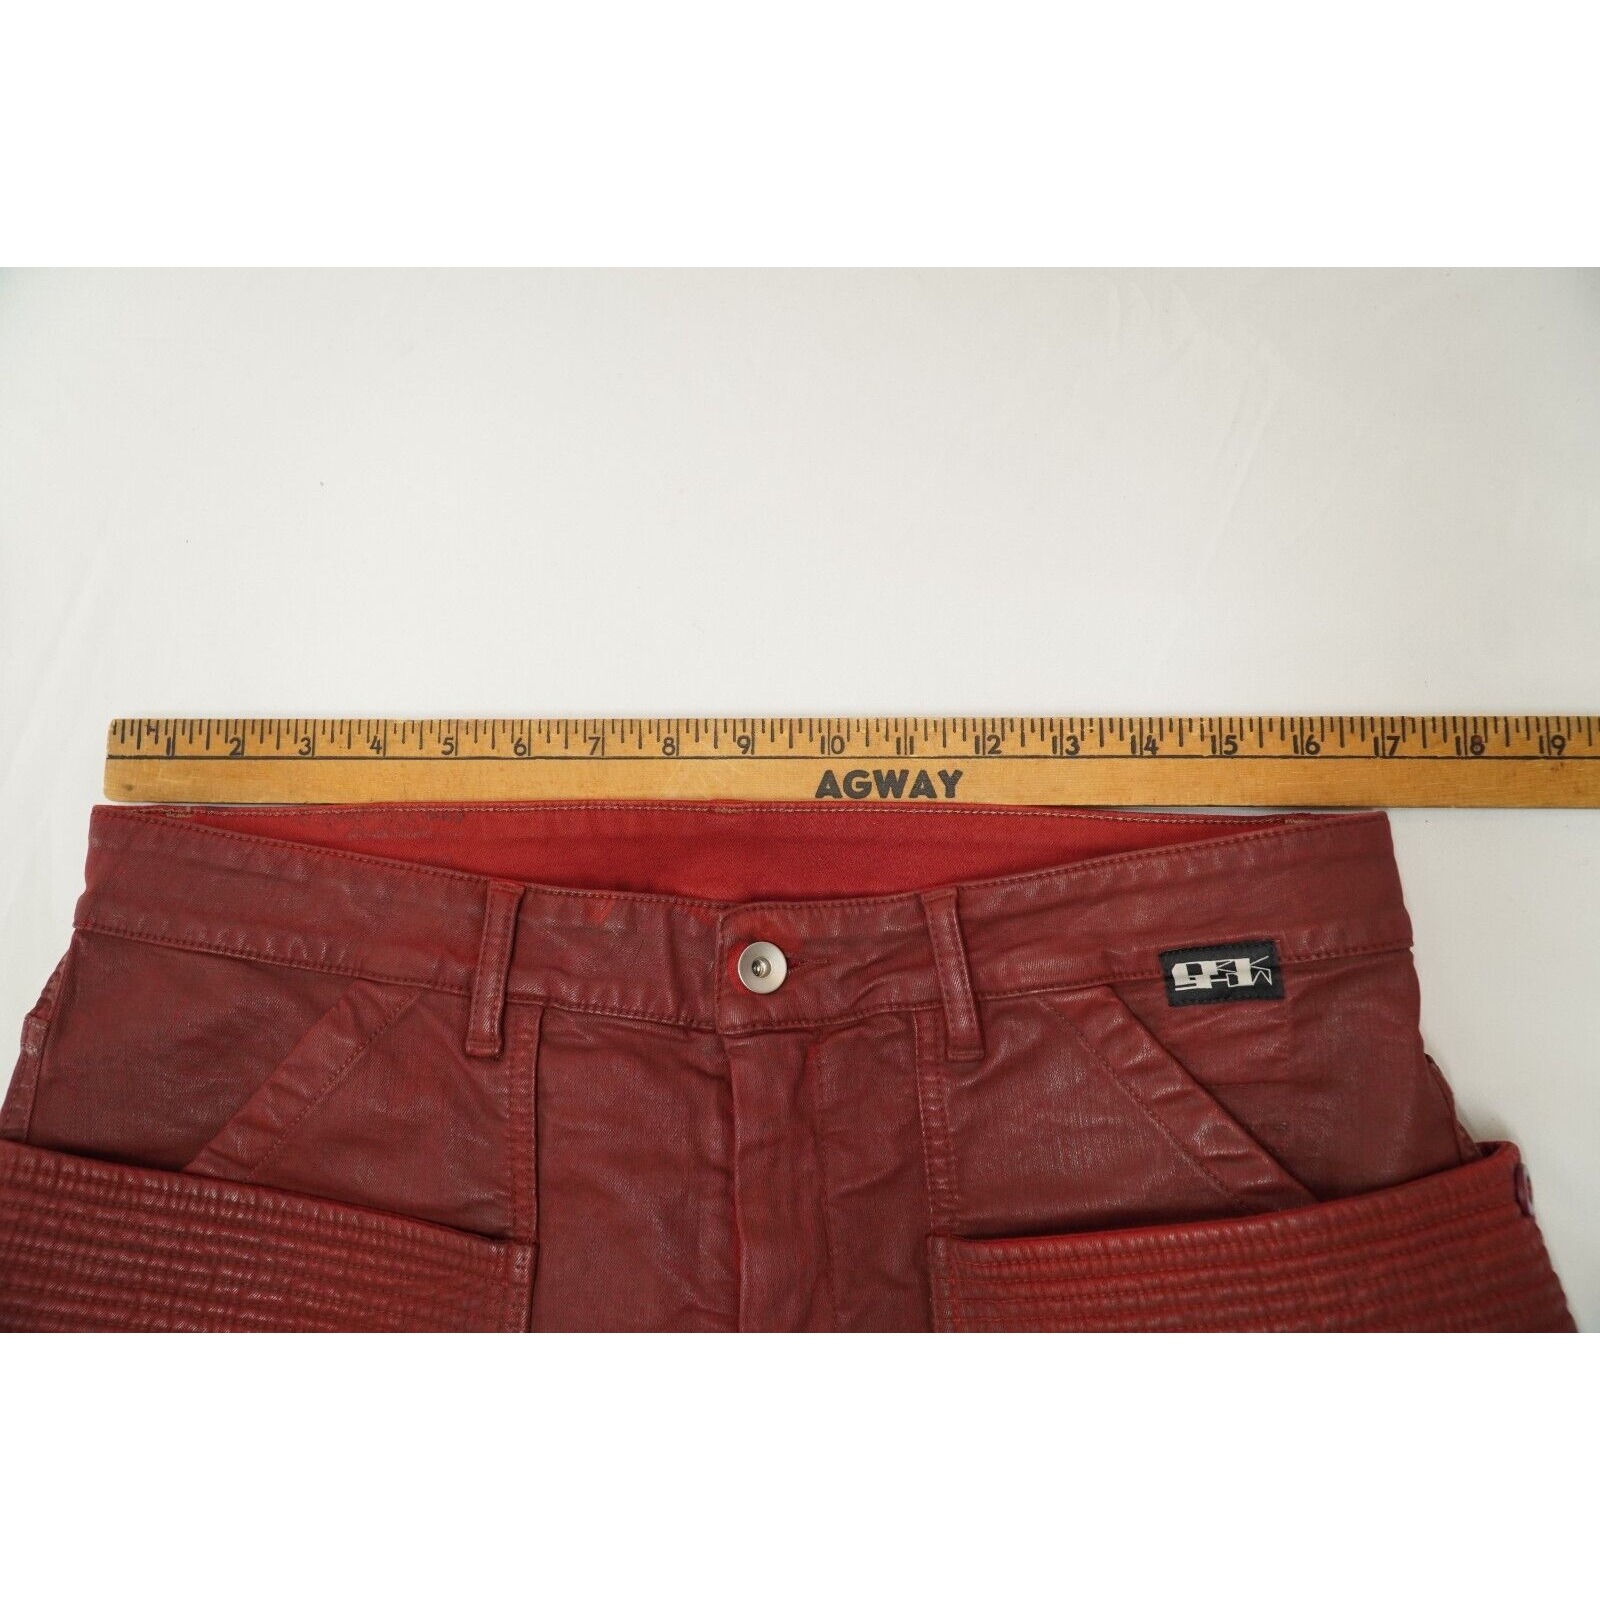 SS21 Easy Creatch Cut 33 Wax Trouser Cargo Pants Dark Cherry - 16